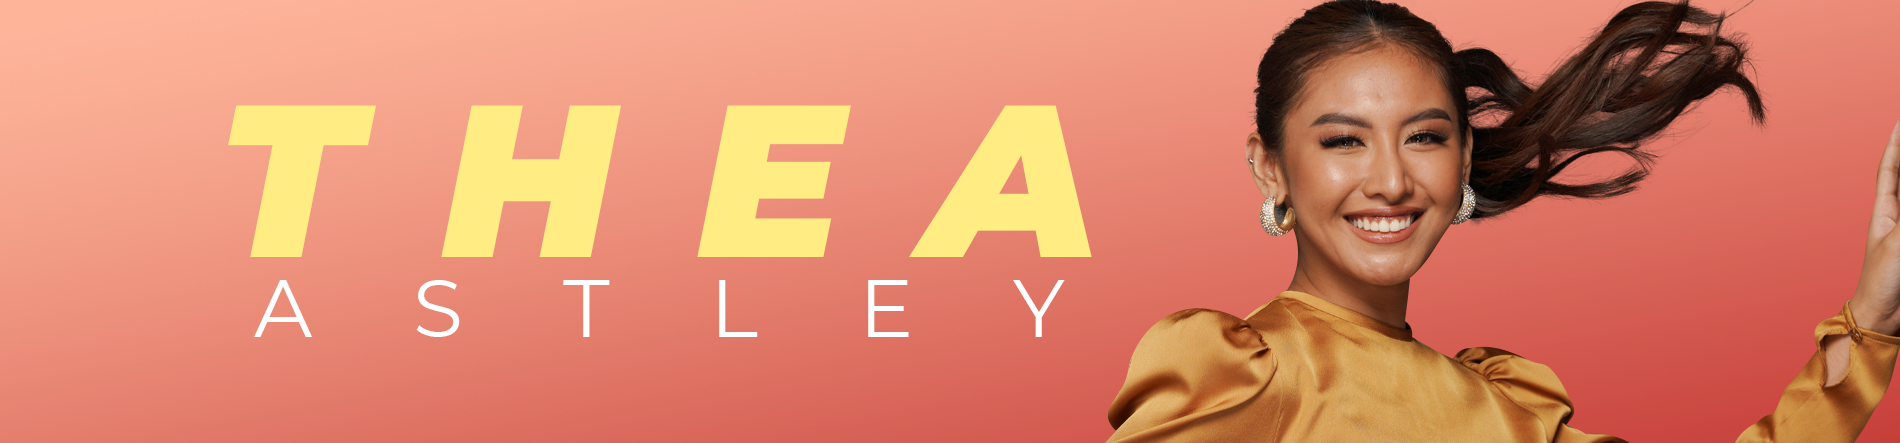 Thea Astley Desktop Banner